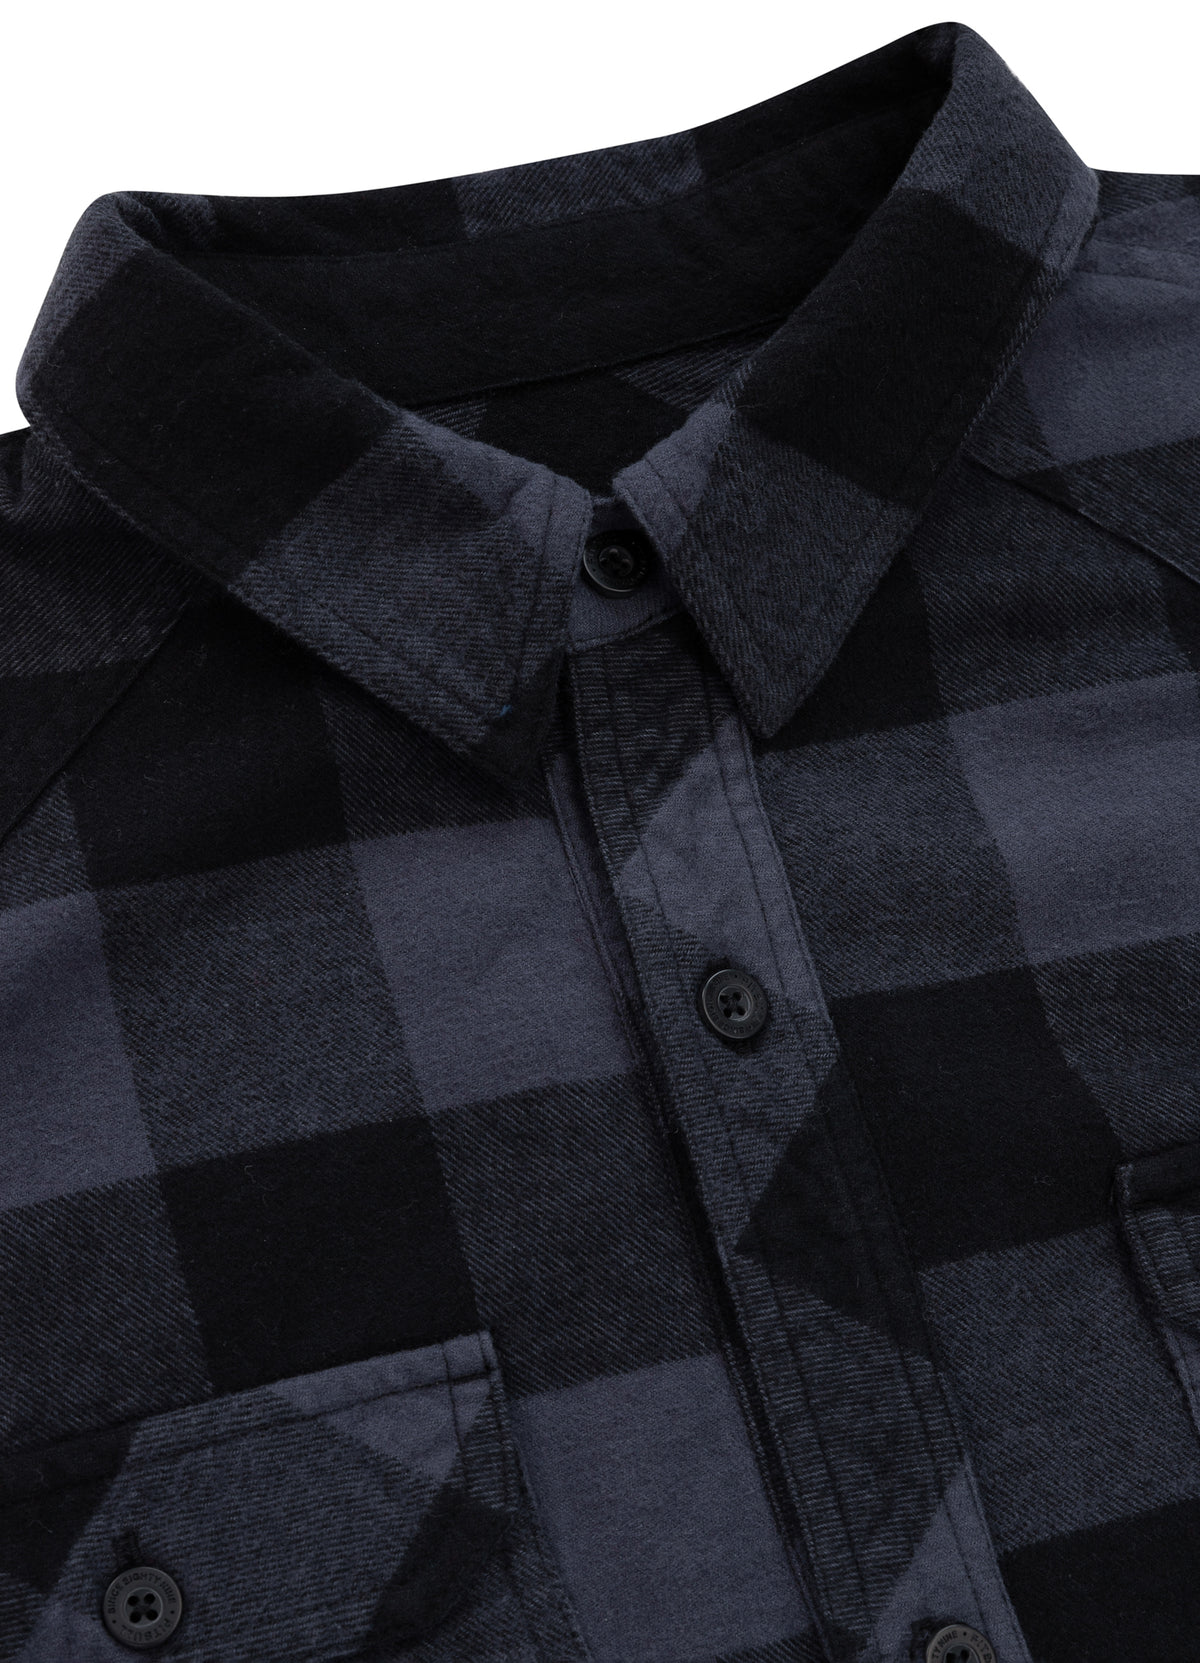 MITCHELL Grey/Black Flannel Shirt - Pitbullstore.eu